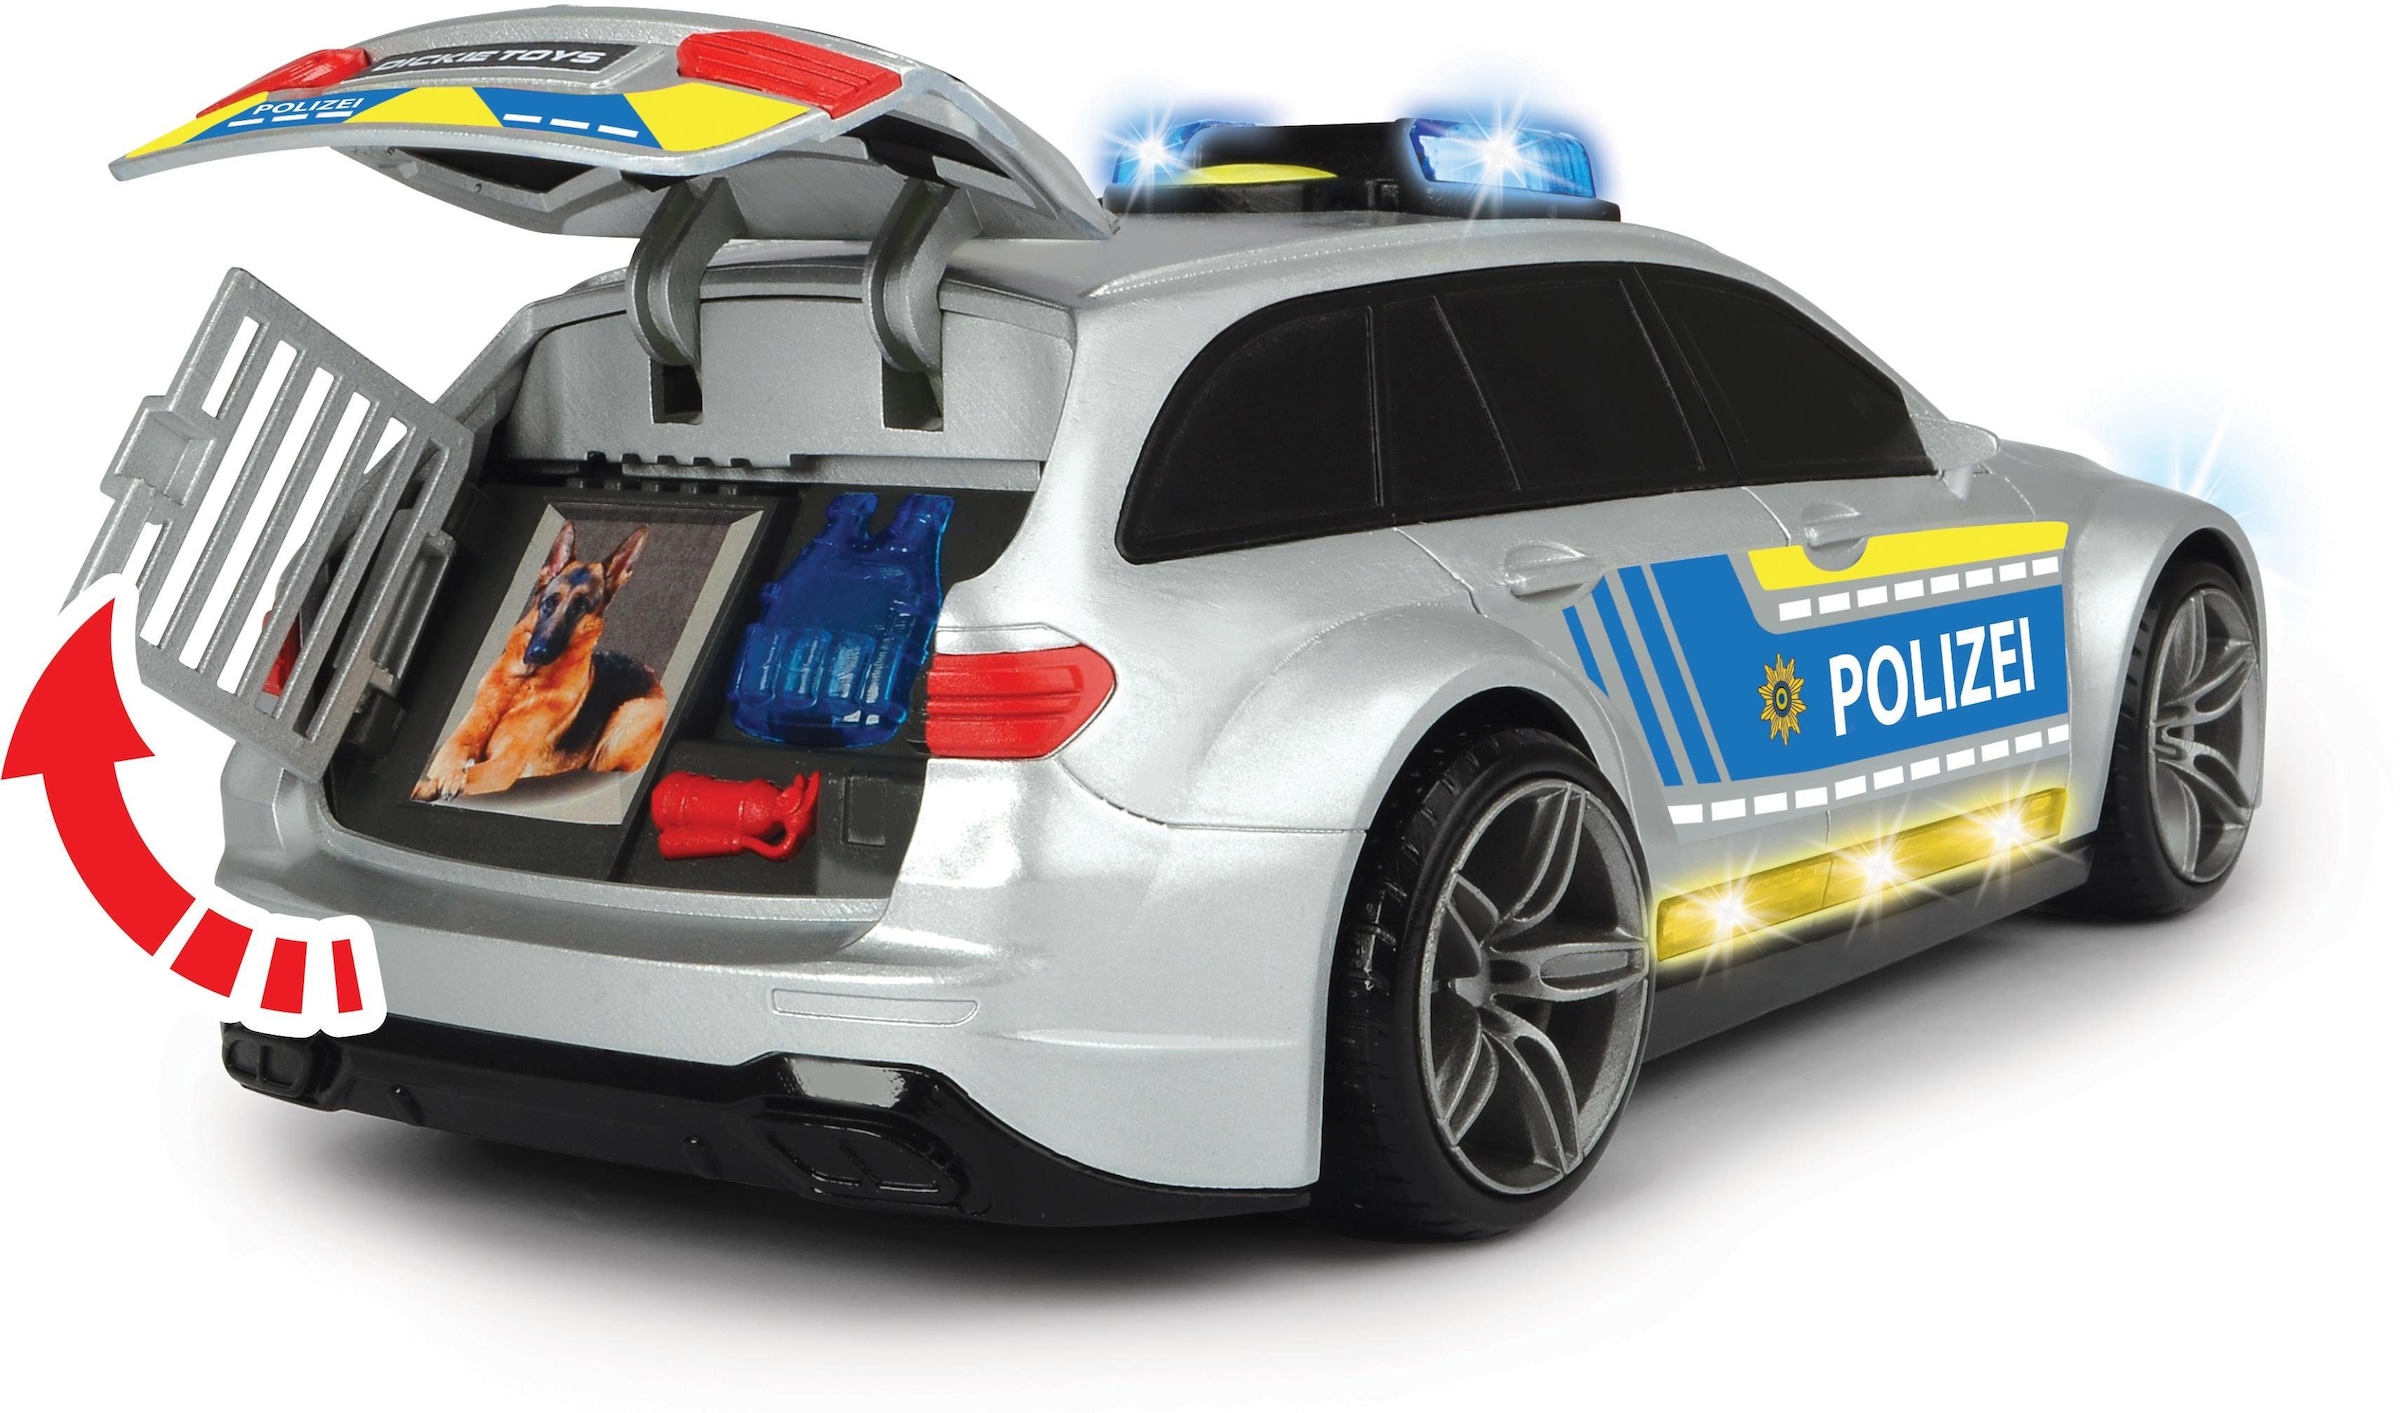 Dickie Toys Spielzeug-Polizei »Mercedes AMG E43«